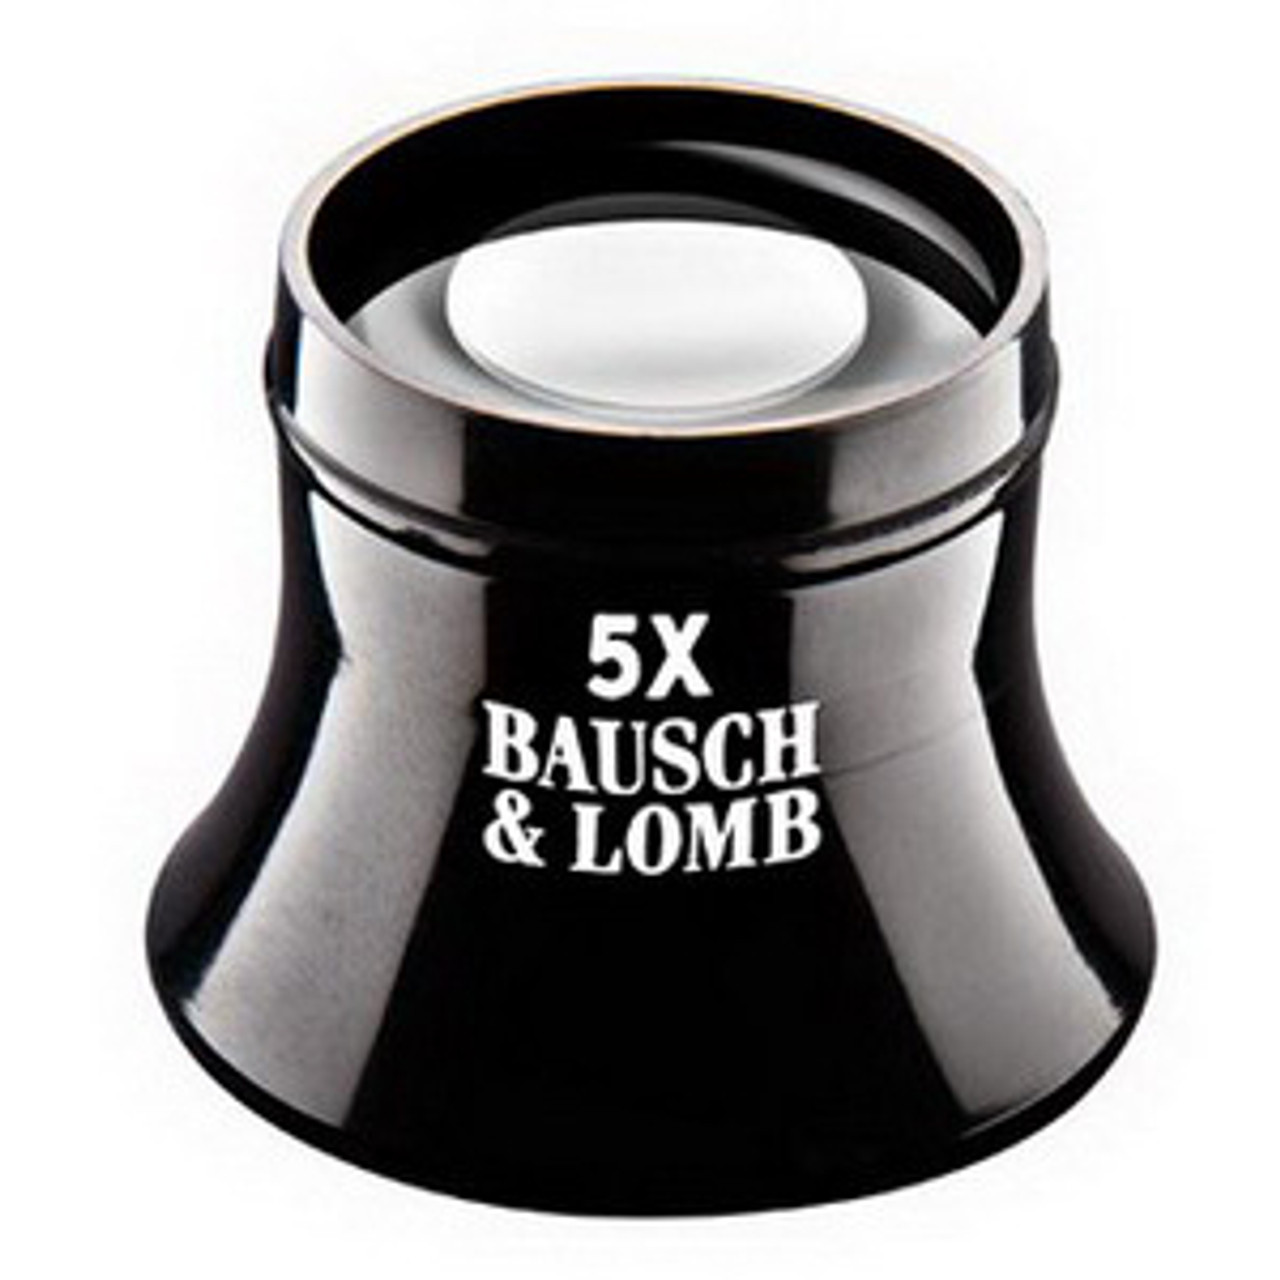 Bausch & Lomb 5X Inspection Eye Loupe - 81-41-72 - Light Tool Supply